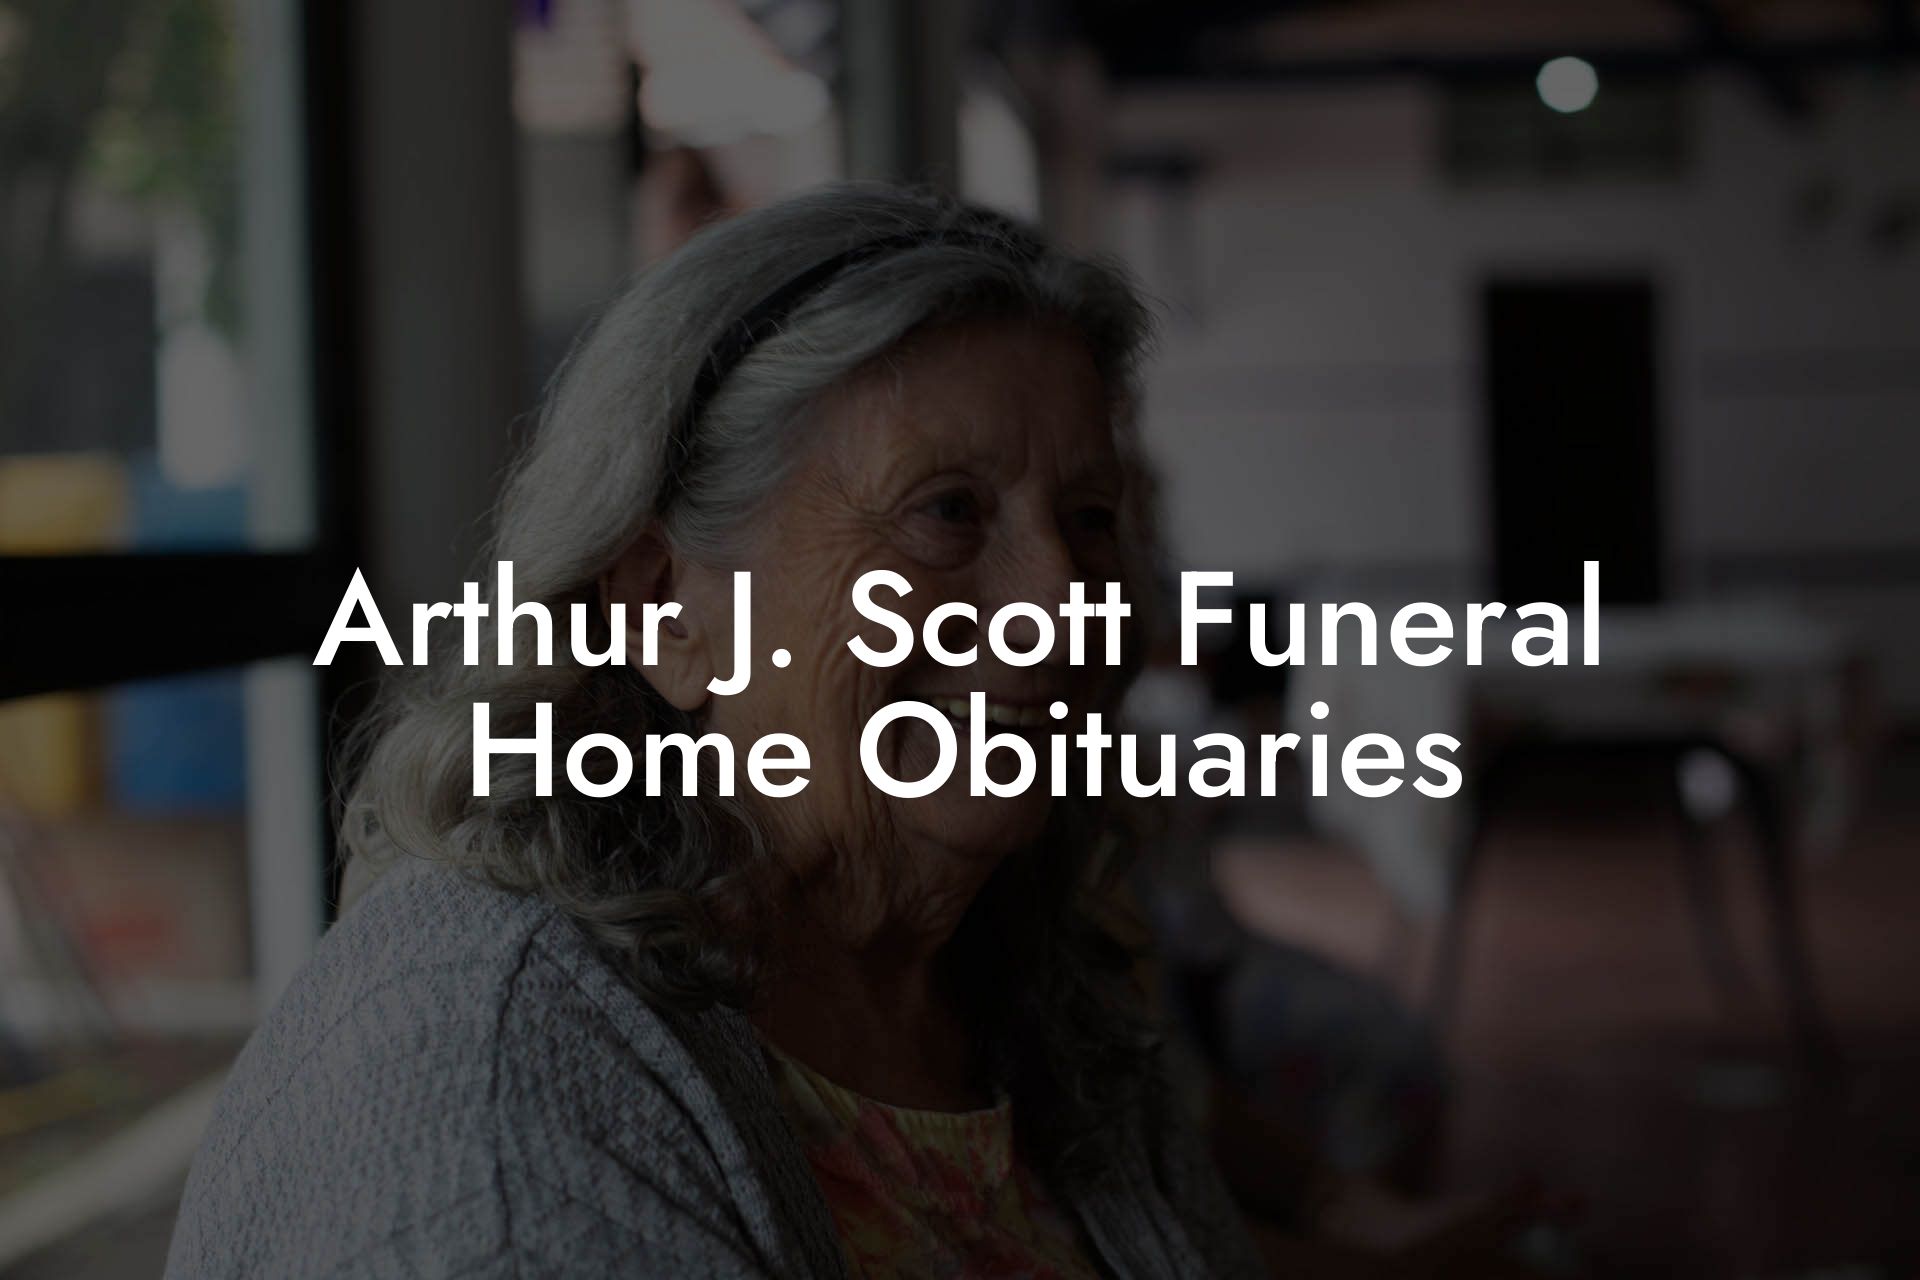 Arthur J. Scott Funeral Home Obituaries